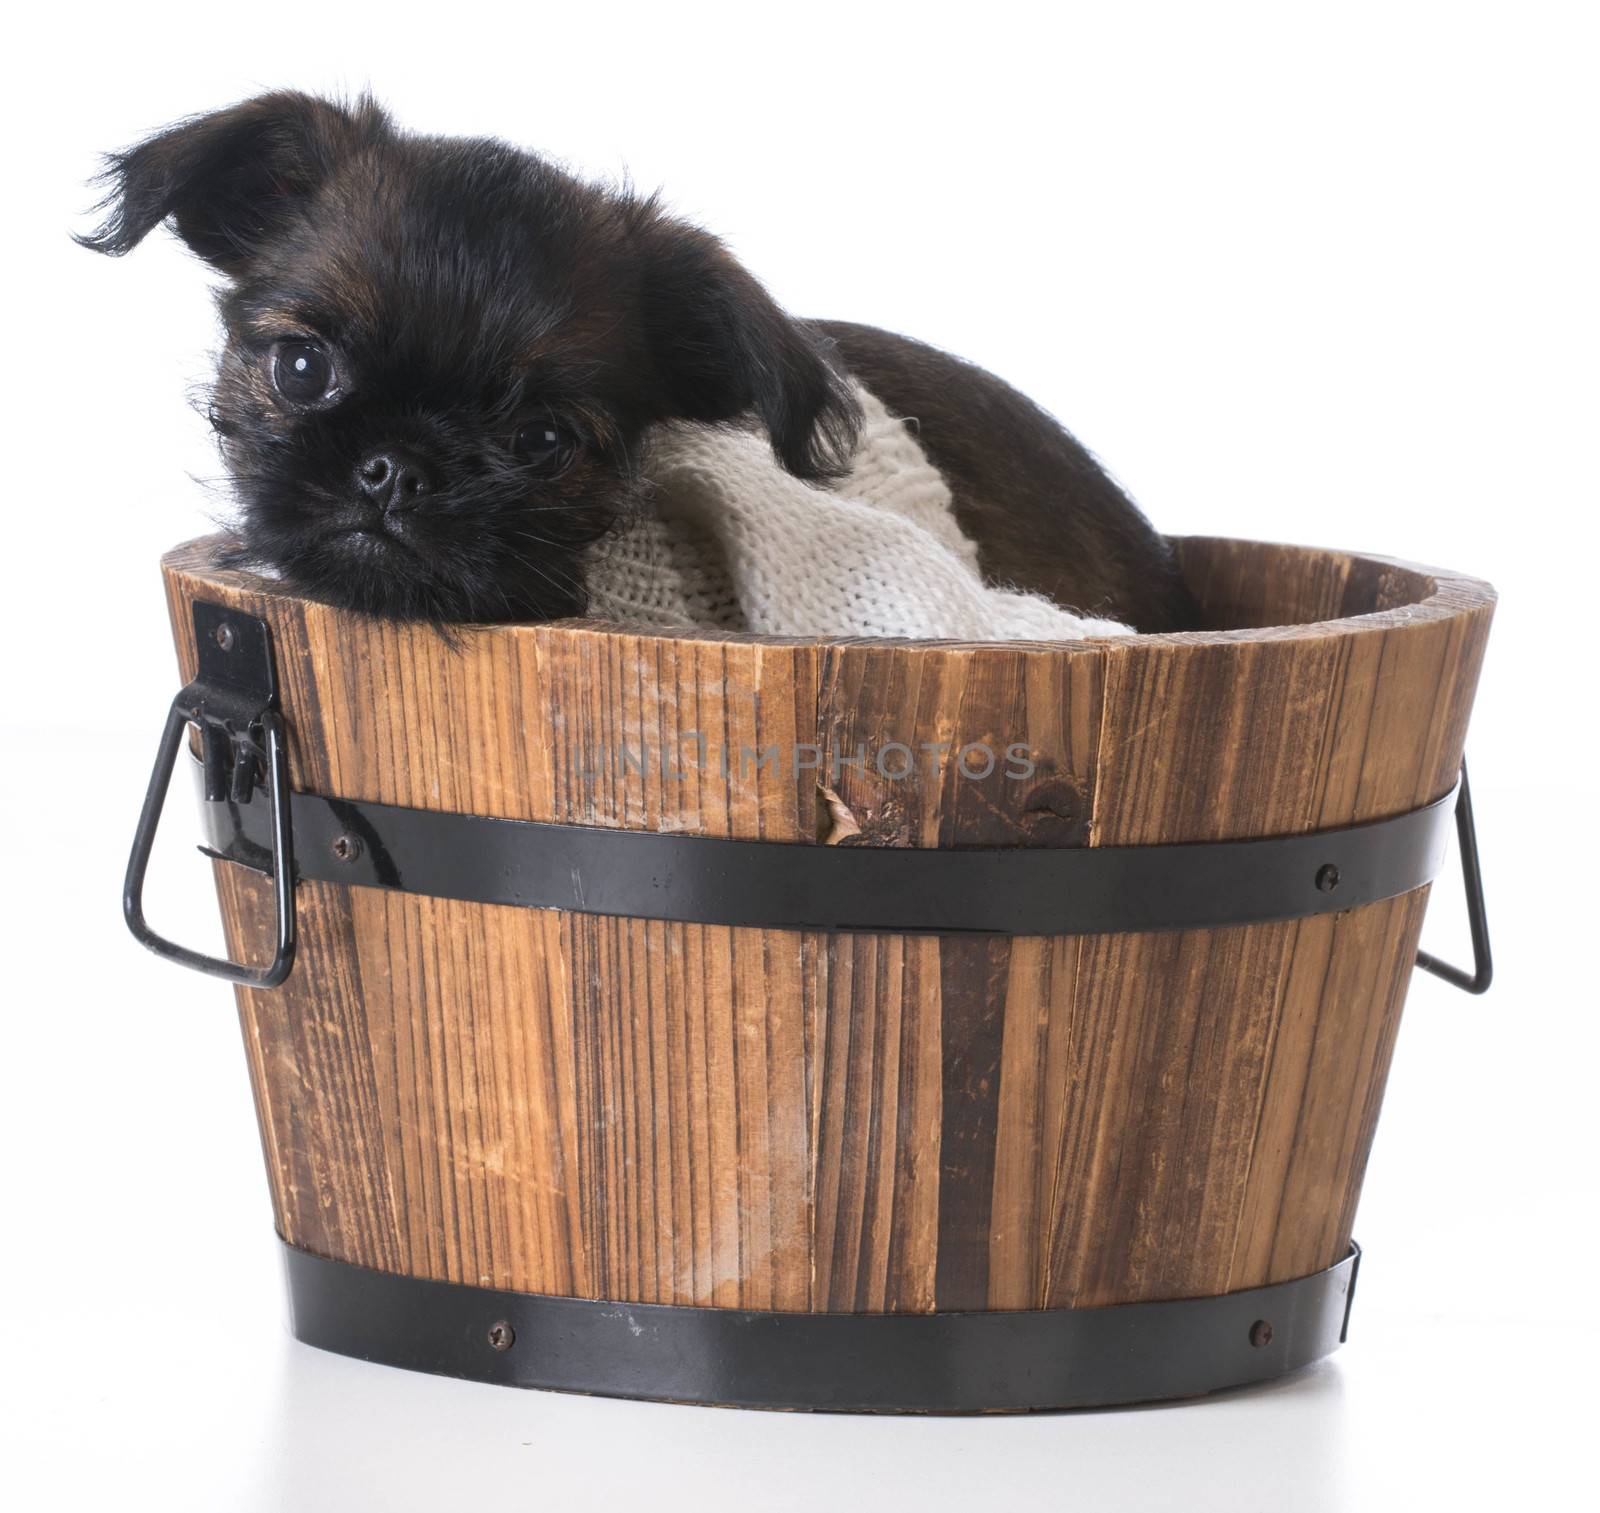 cute puppy - brussels griffon inside a wooden bucket on white background